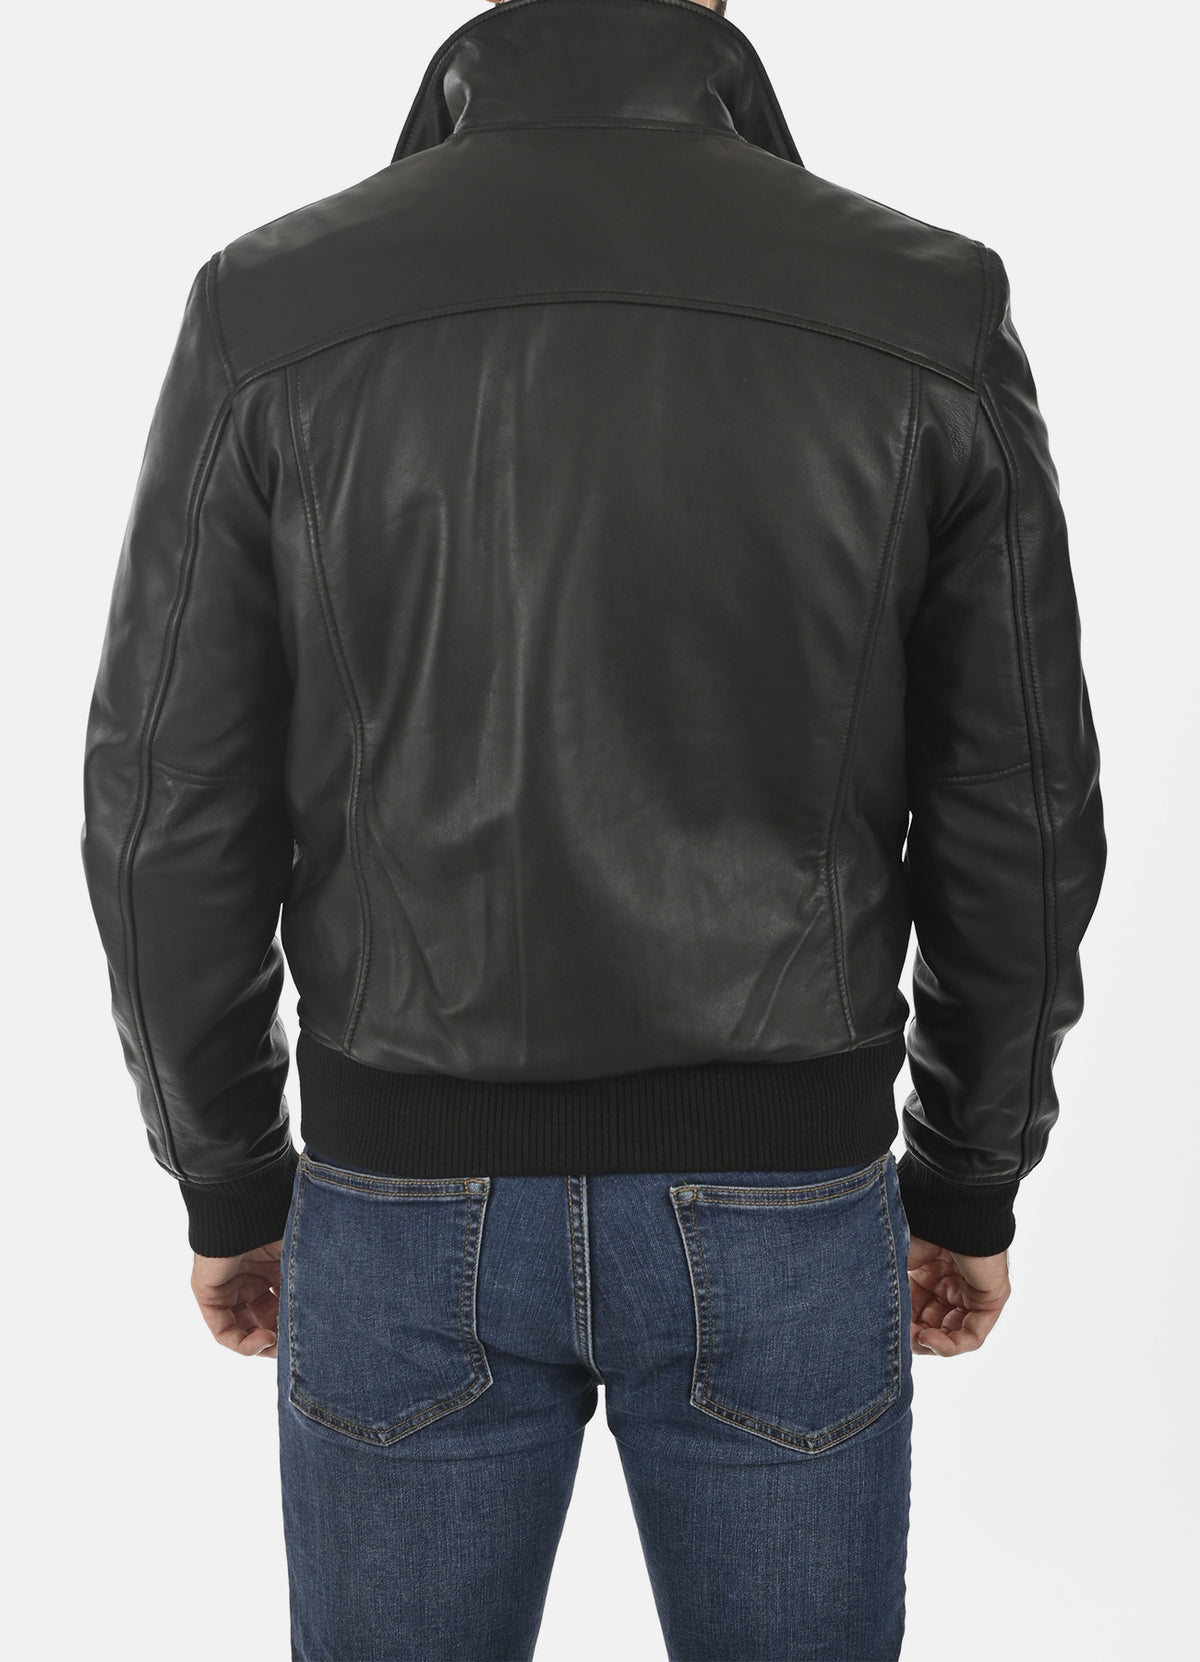 Mens Pitch Black Bomber Leather Jacket | Elite Jacket